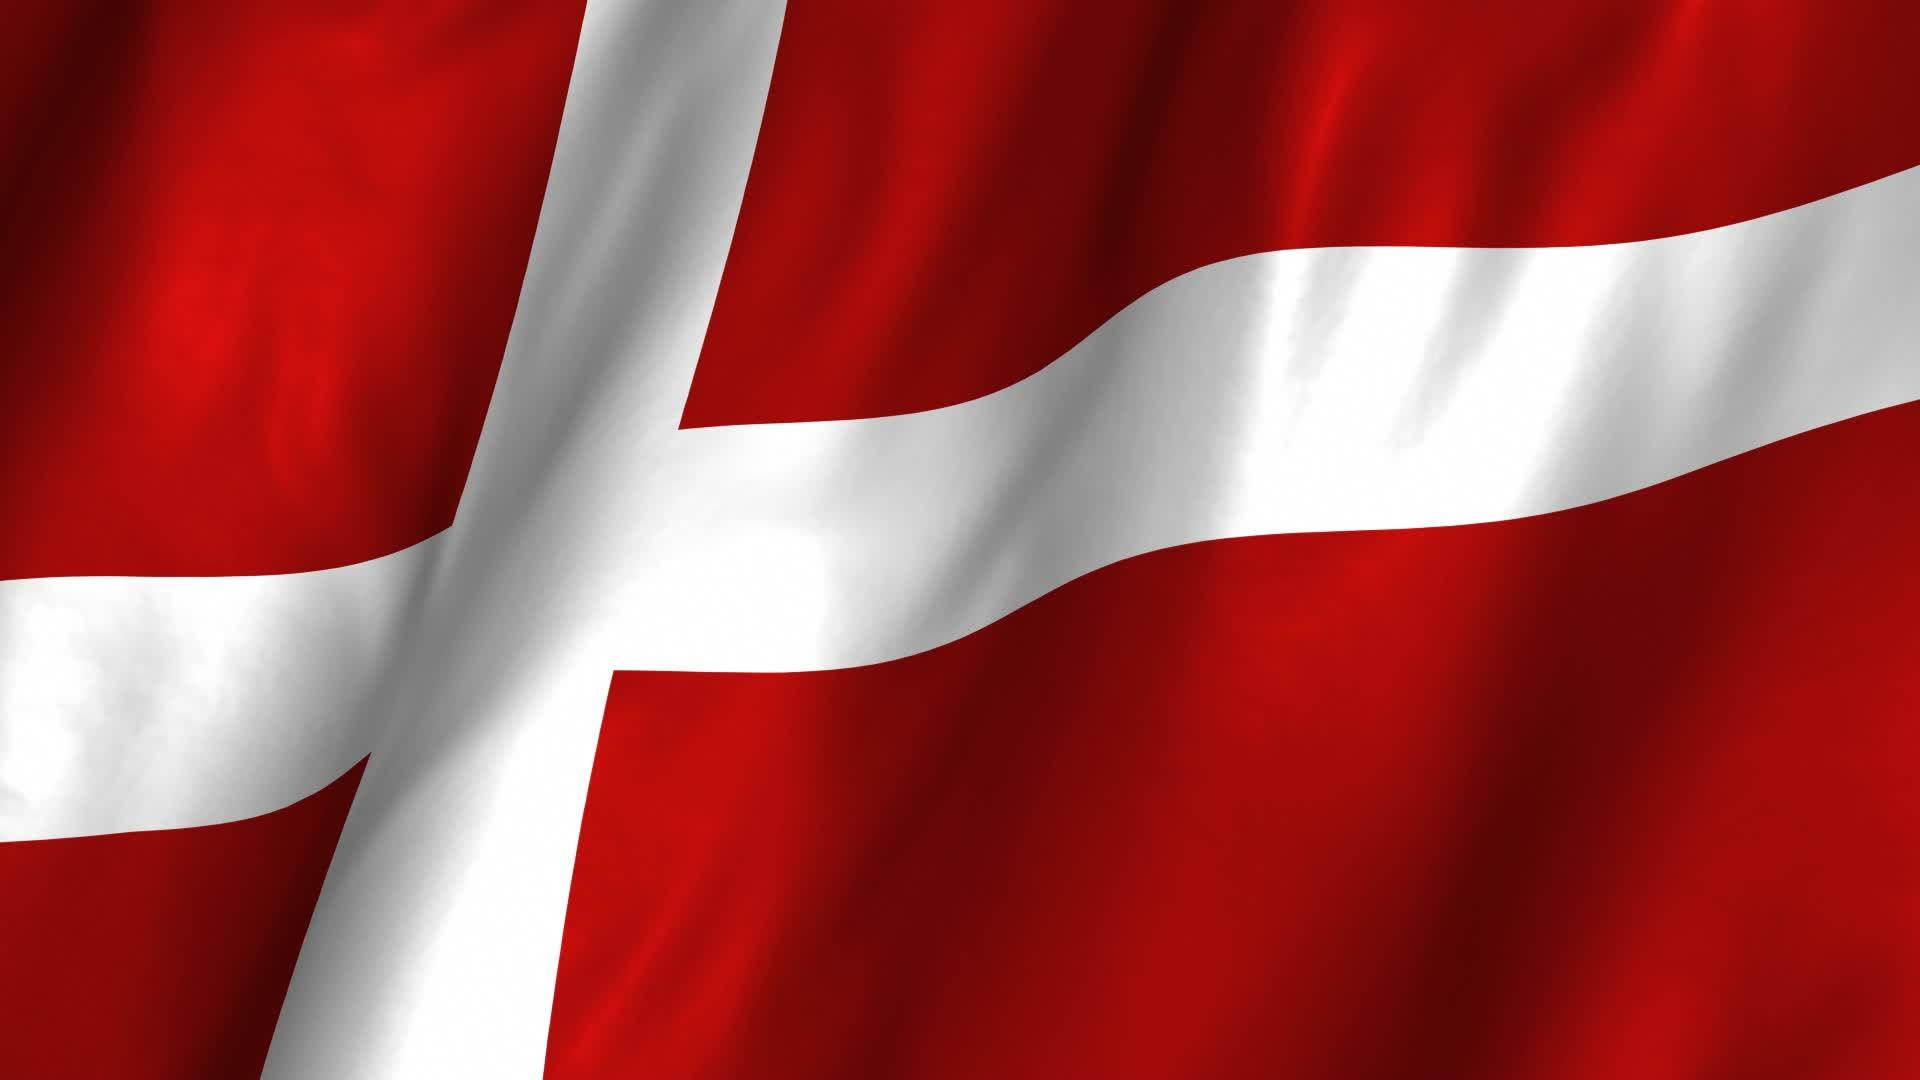 Denmark Flag Image HD Picture Of Flag Imageco.Org